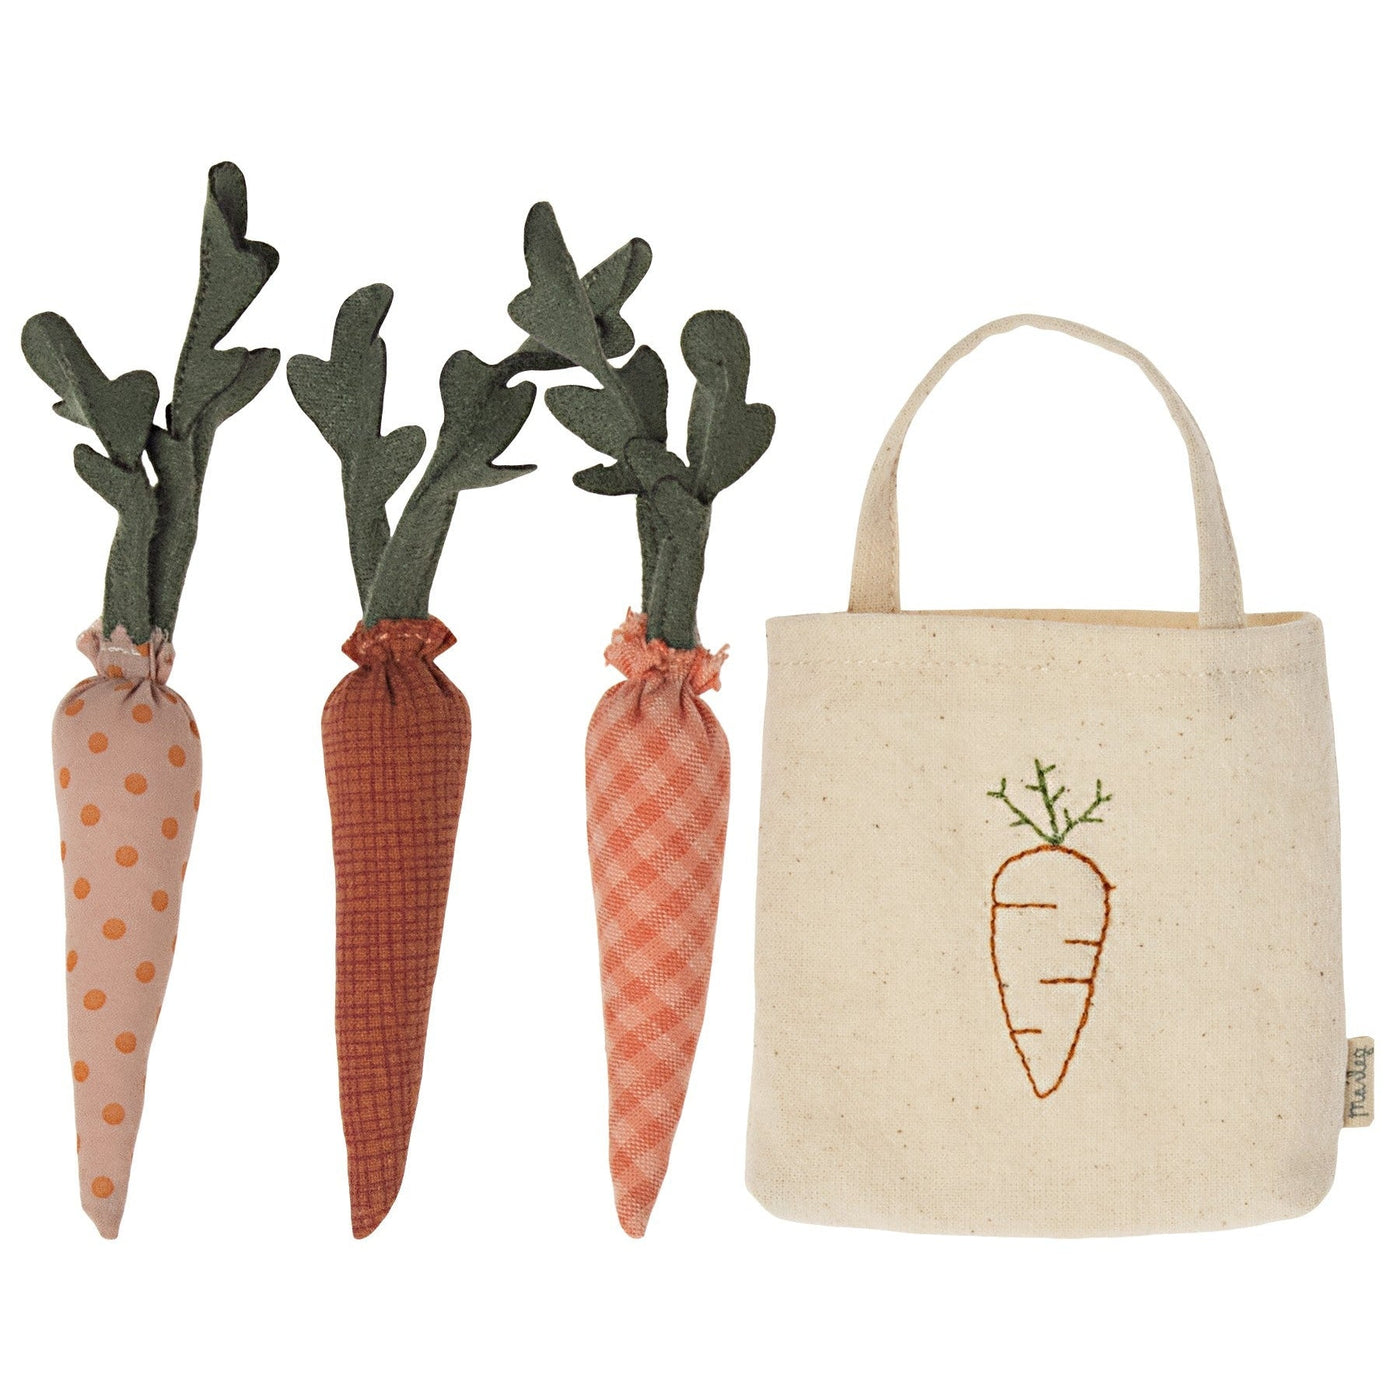 Miniature Carrots in Shopping Bag